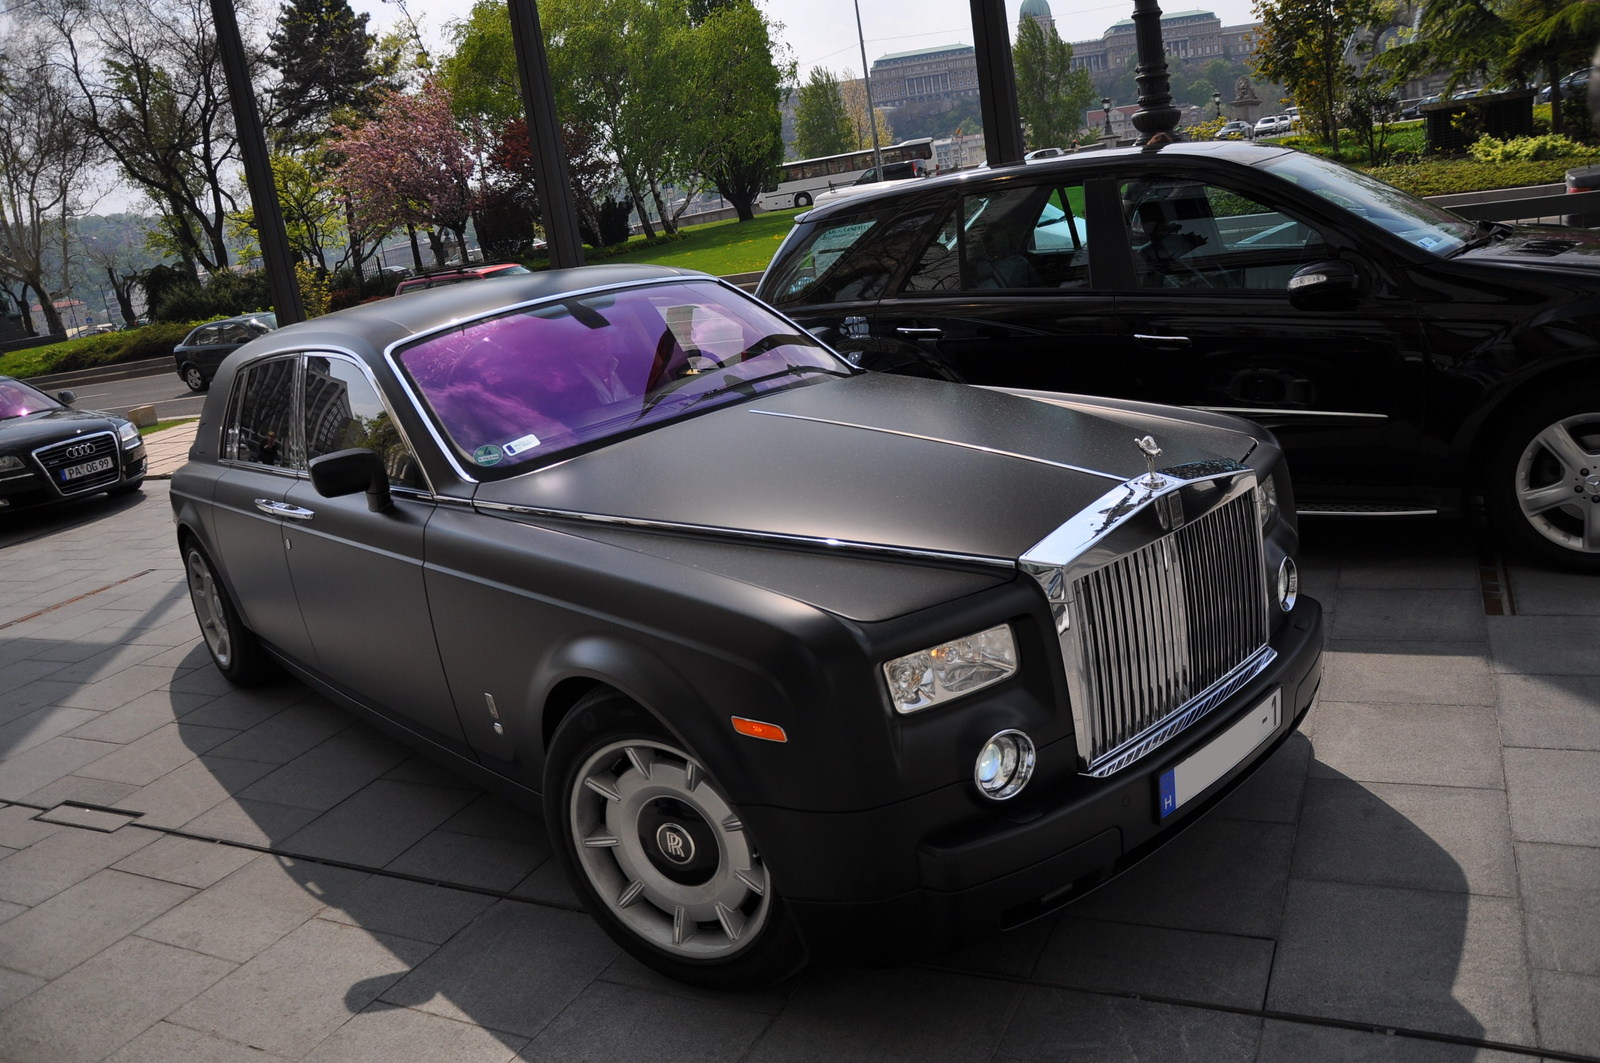 Rolls-Royce Phantom 101